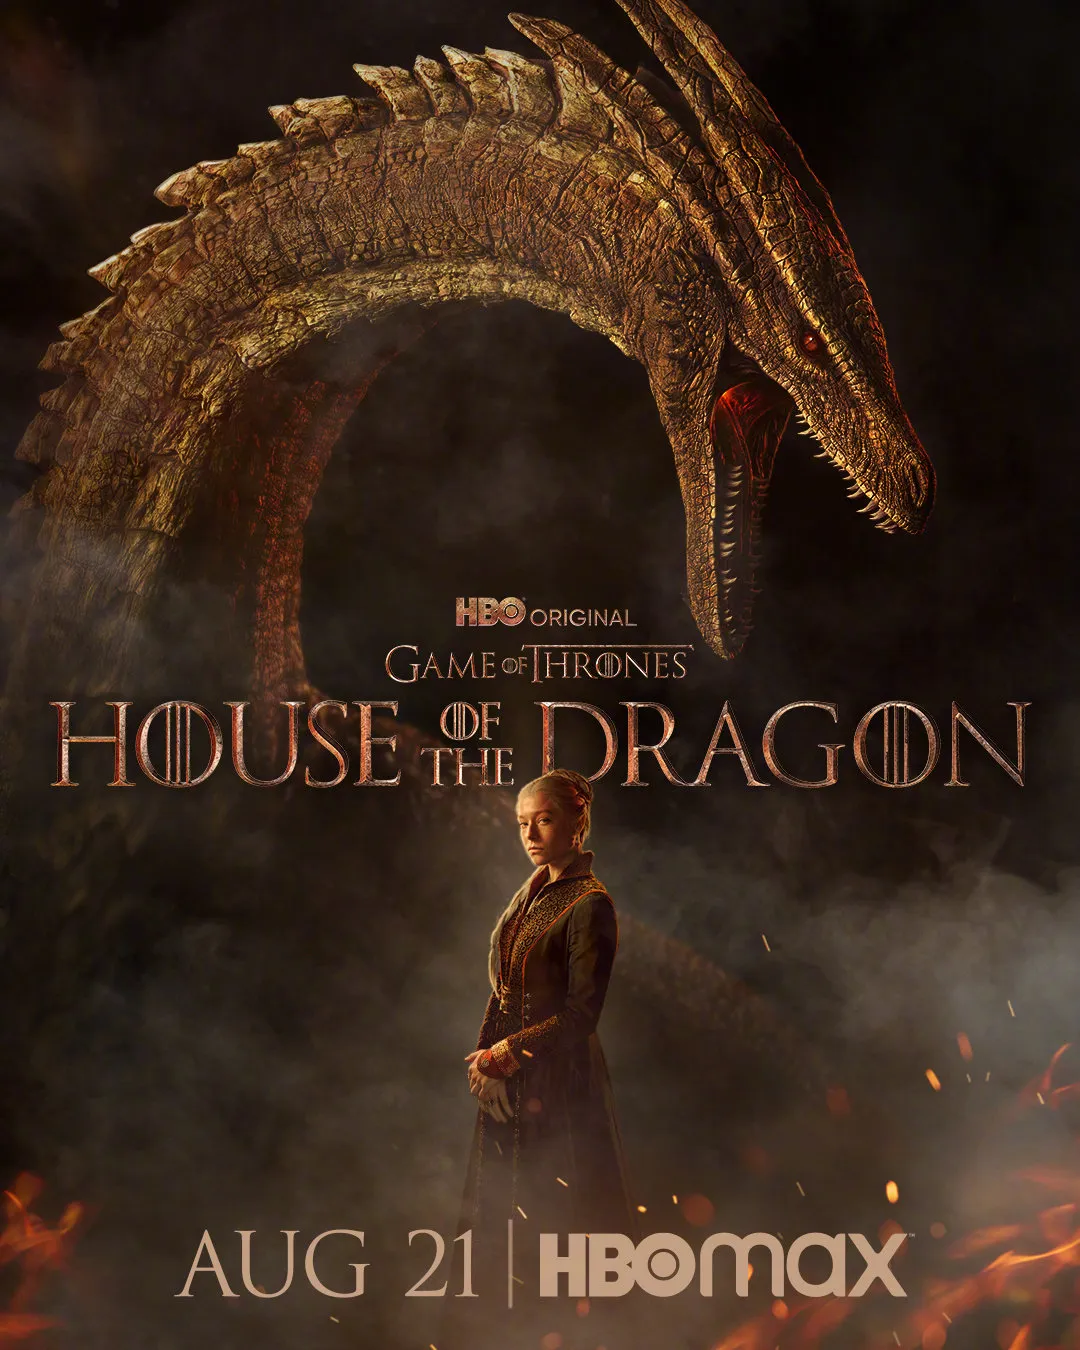 George R R Martin: 'House of the Dragon' takes 40 more episodes to make sense | FMV6